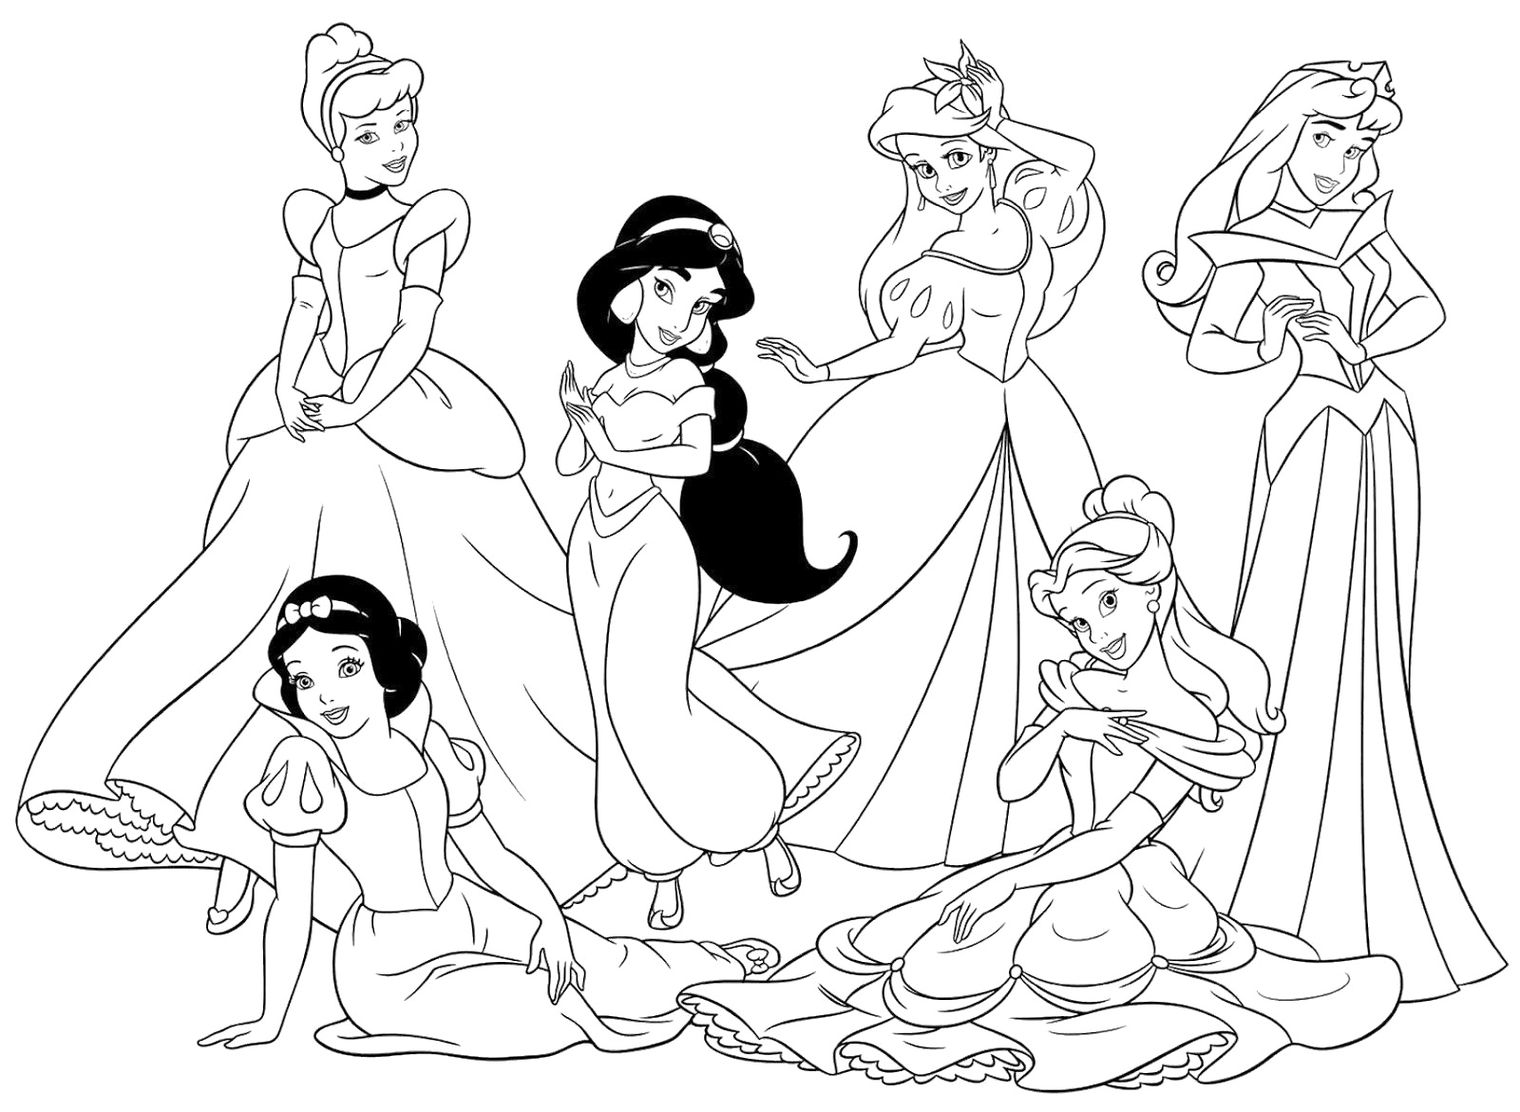 Princesas para colorir - Desenhos Imprimir